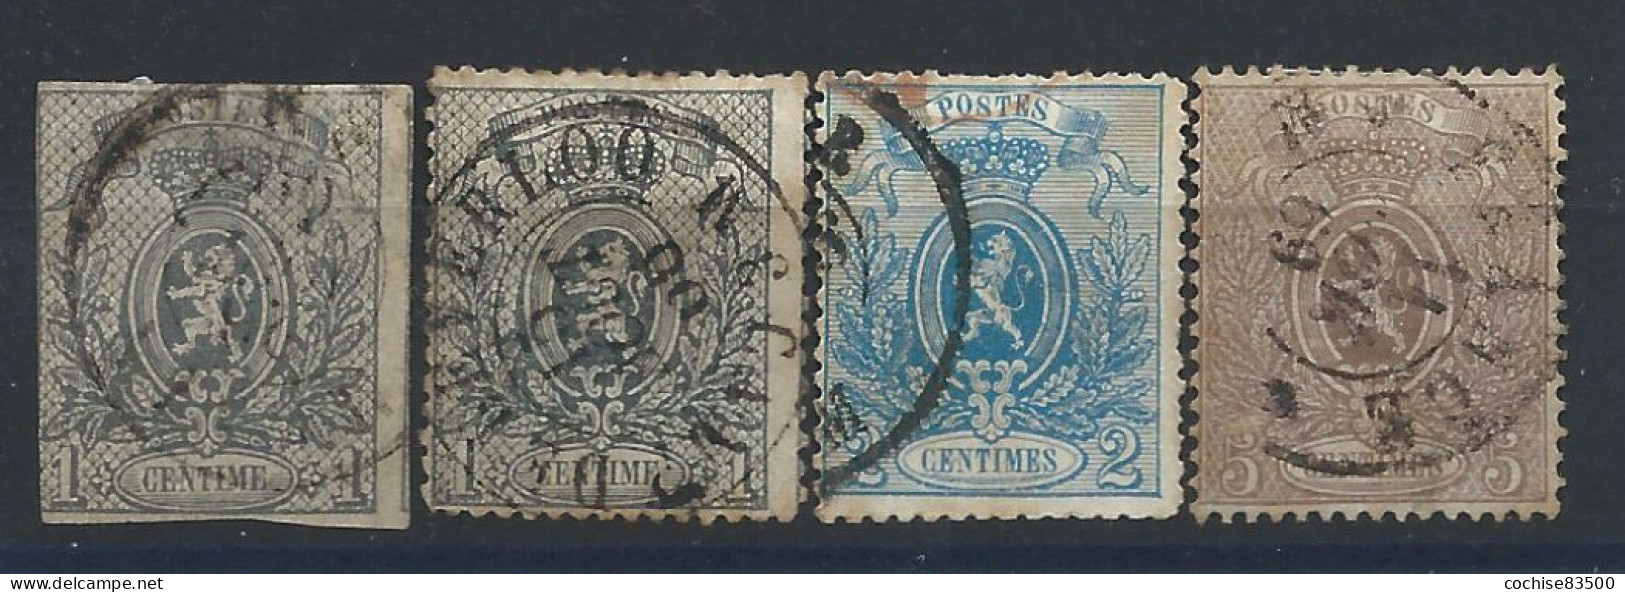 Belgique N°22/25 Obl (FU) 1866/67 - Armoiries - 1866-1867 Kleine Leeuw